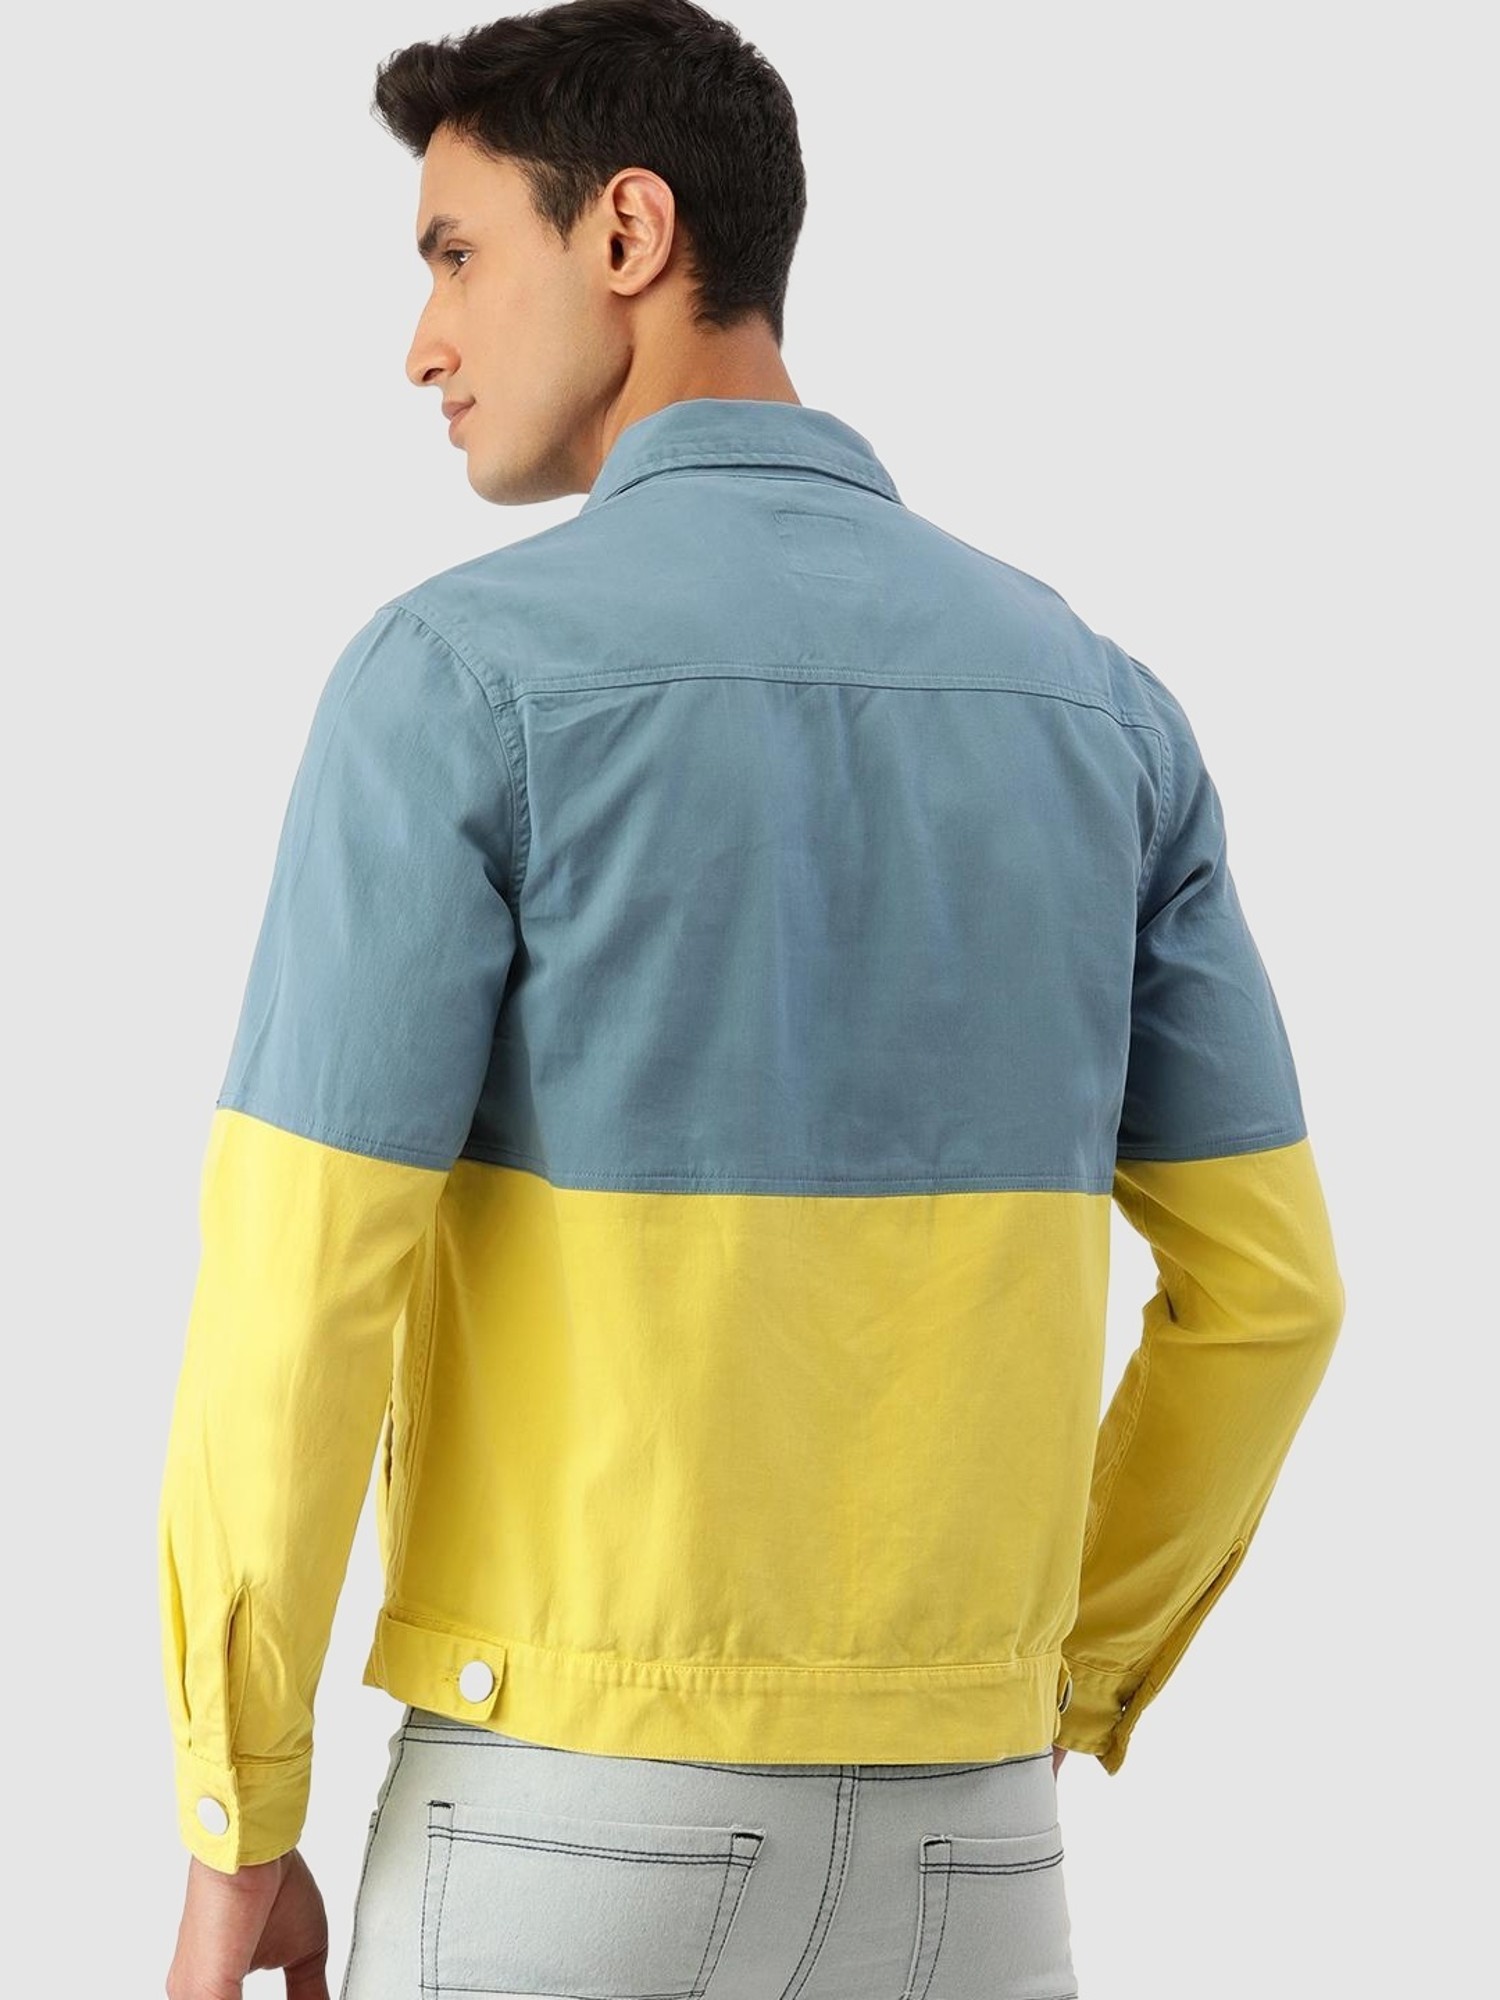 Two-Tone Shaggy Hair, W&LT Denim Jacket, Printed Shirt, Yellow Pants,  Adidas Sneakers & Waist Bag – Tokyo Fashion